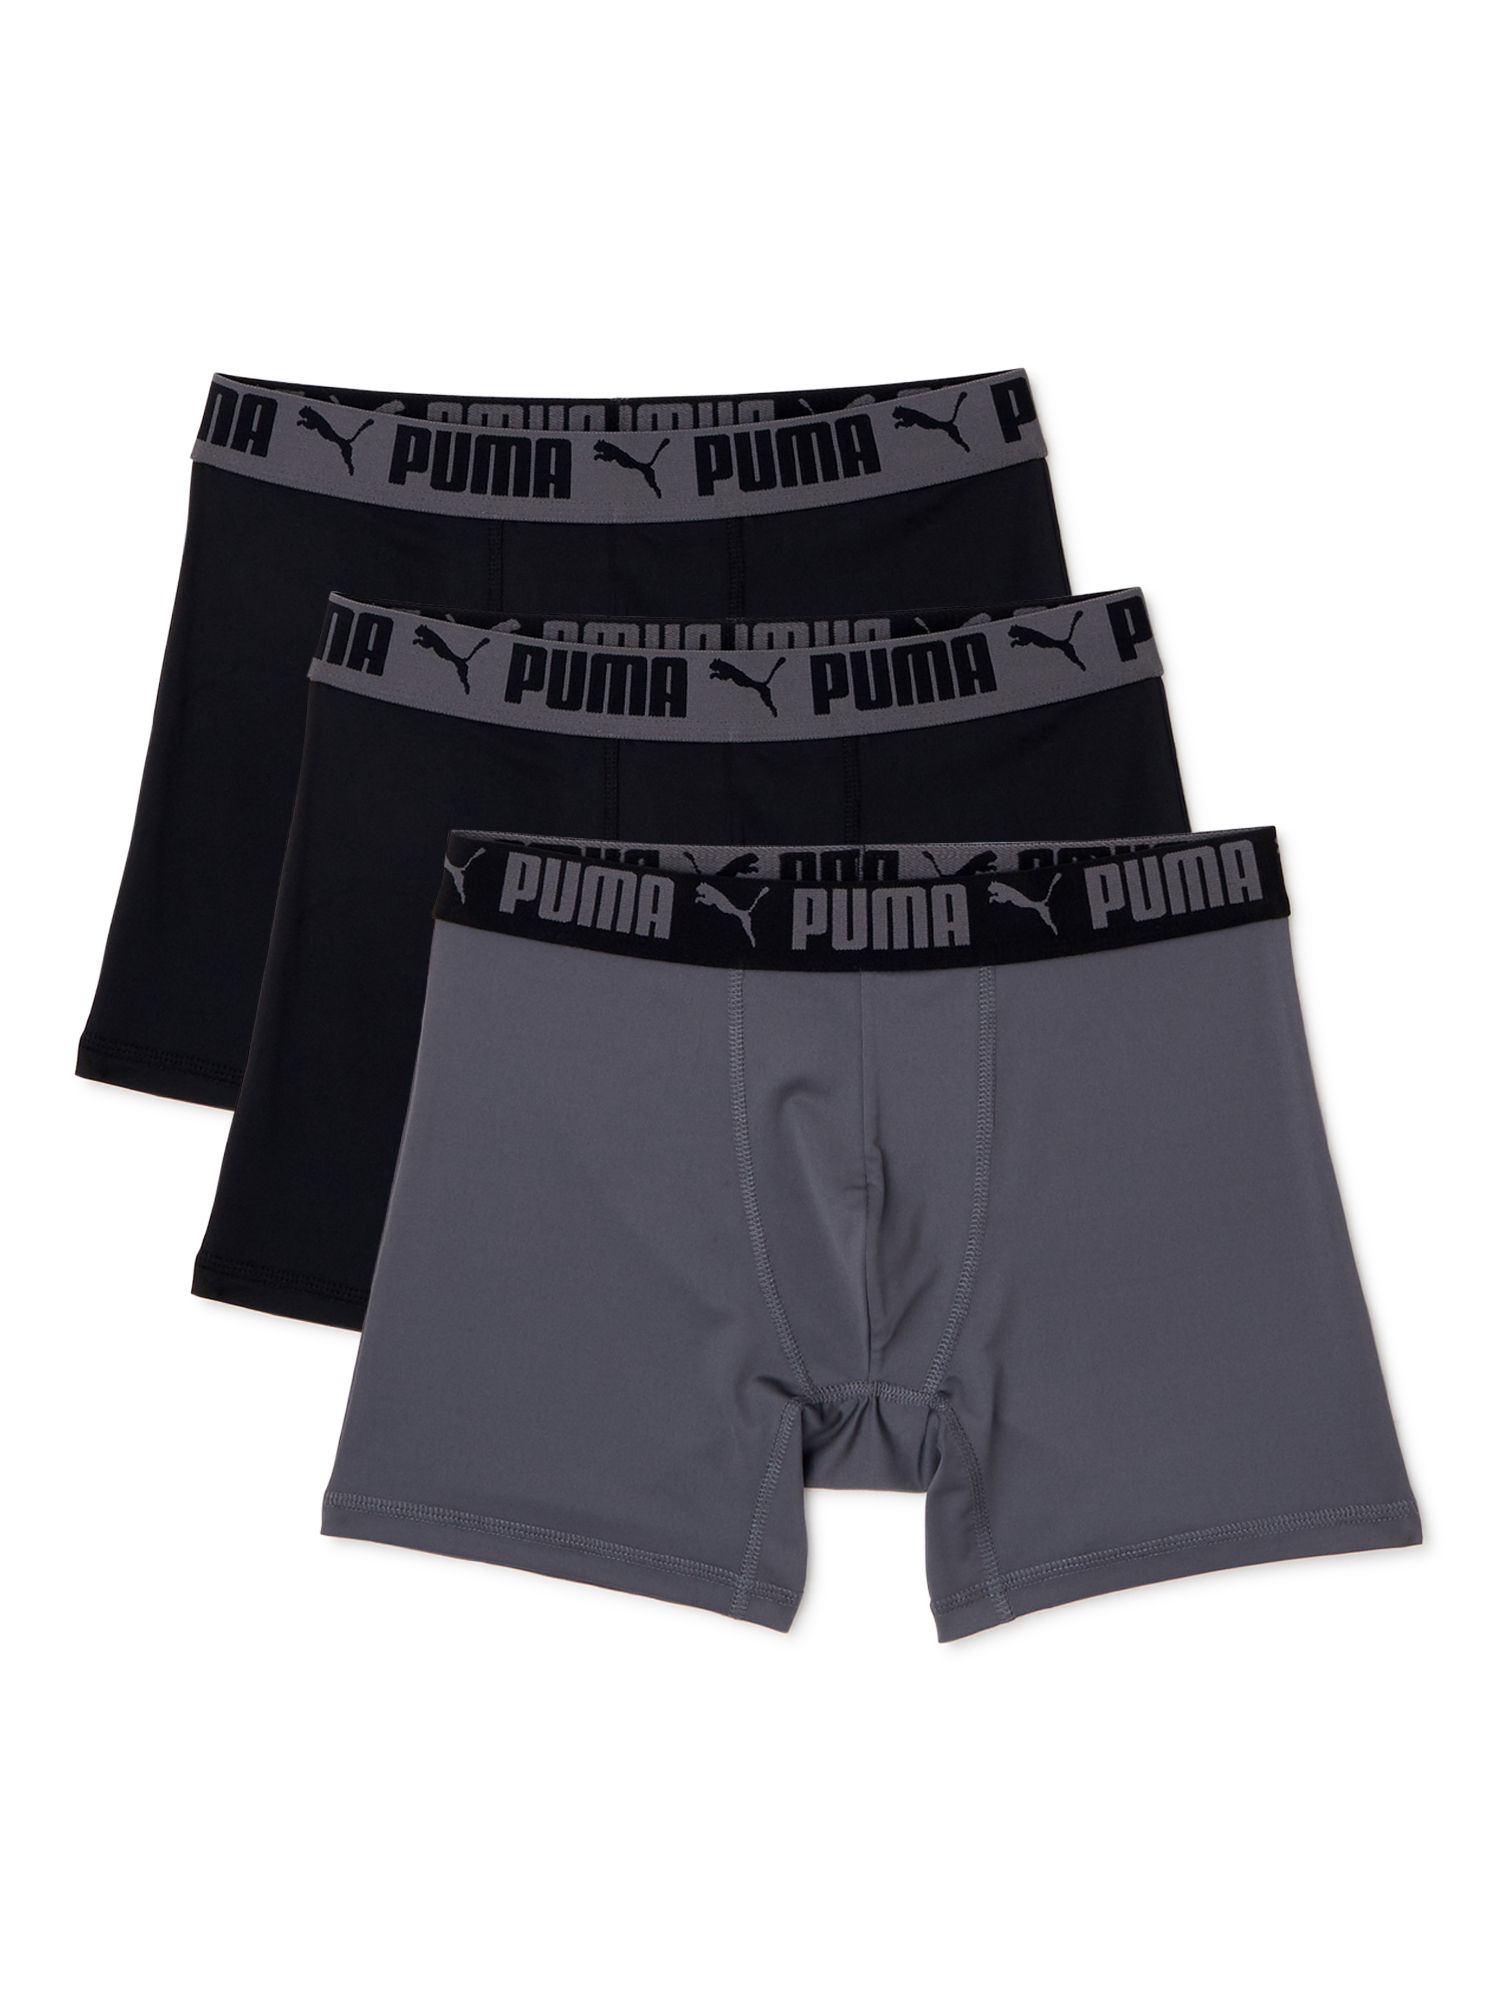 Puma Men's Boxer Briefs, 3-Pack - image 1 of 1